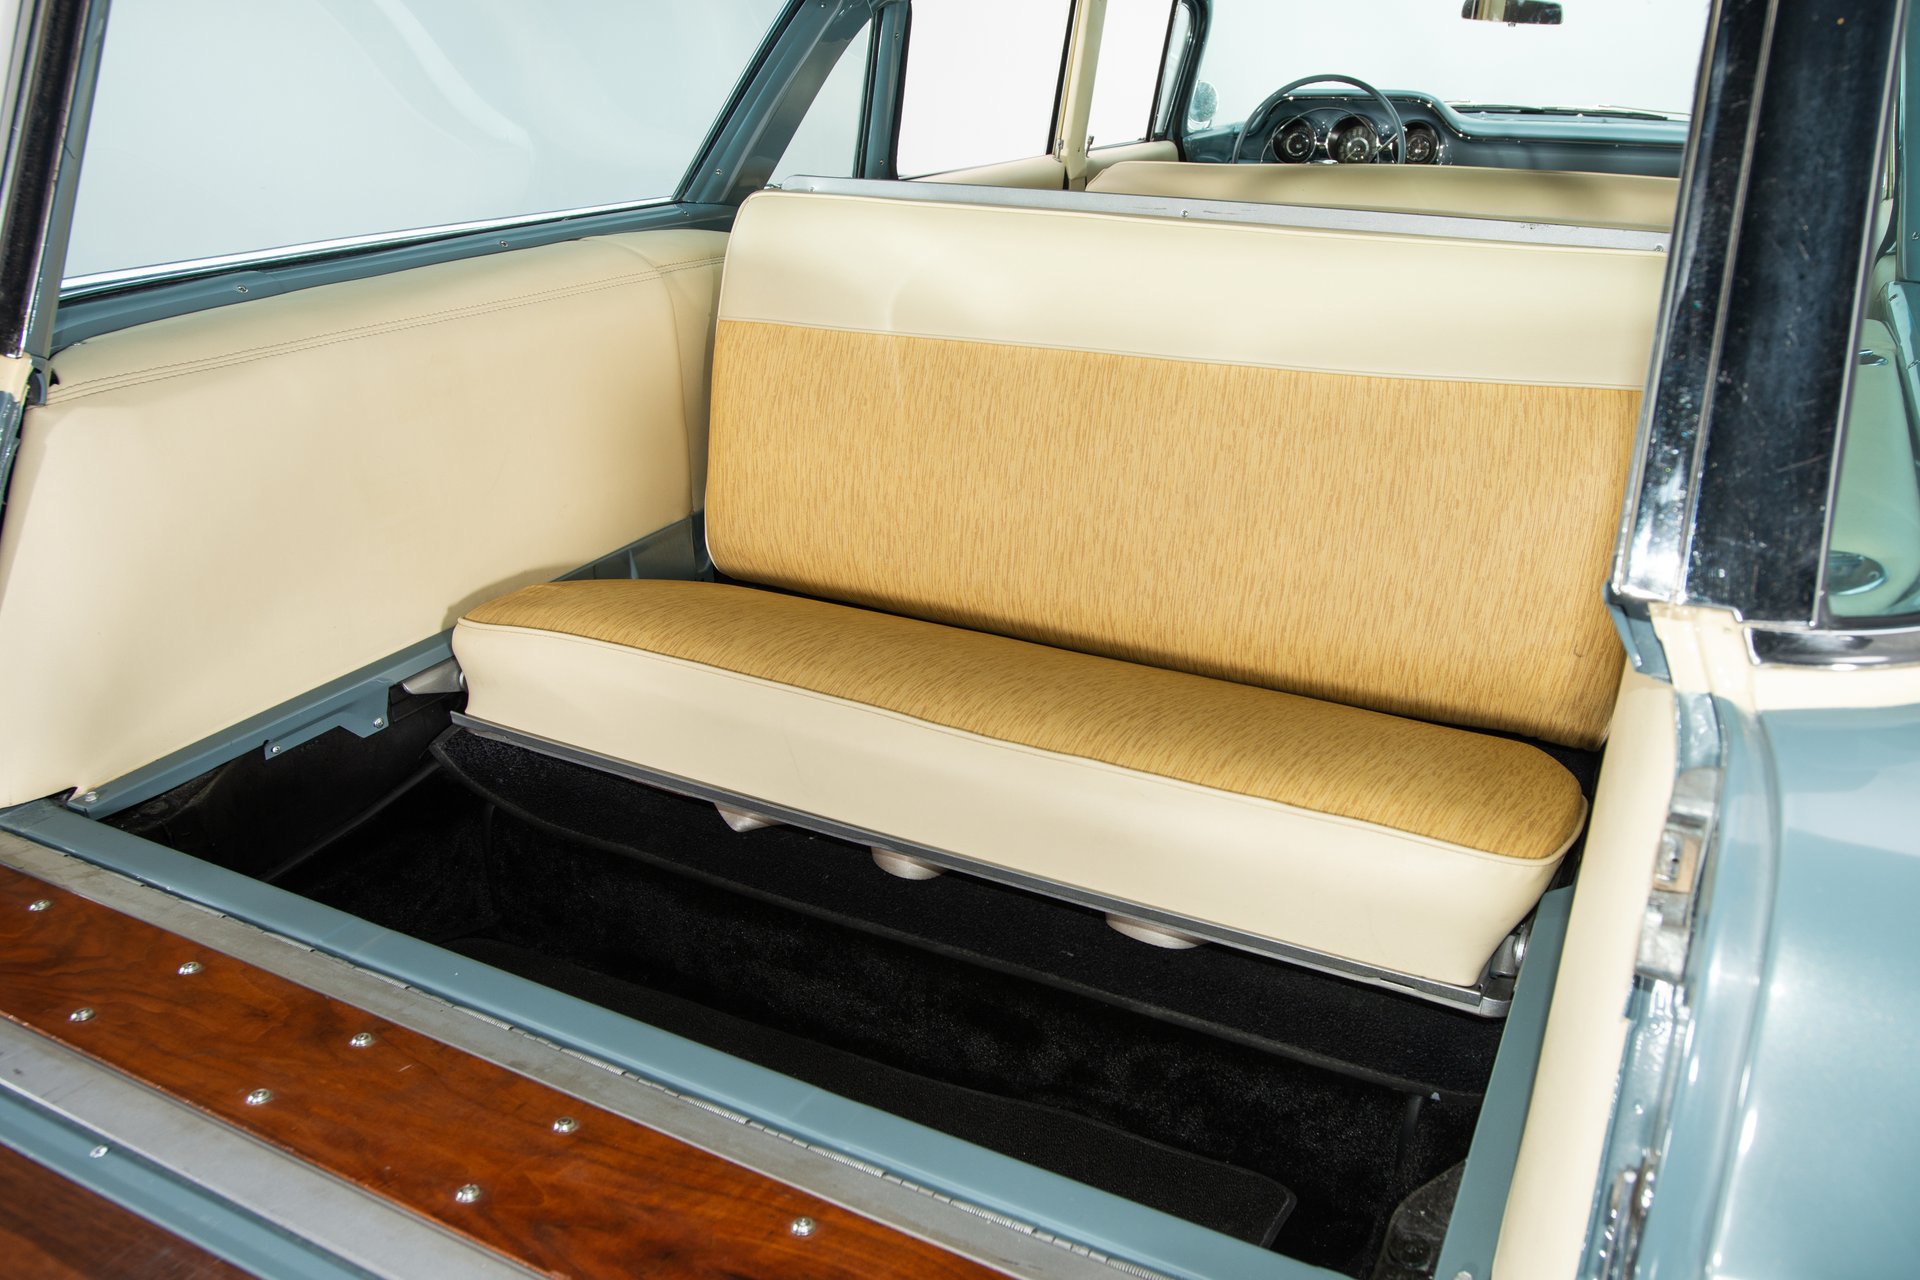 1959 pontiac catalina safari wagon